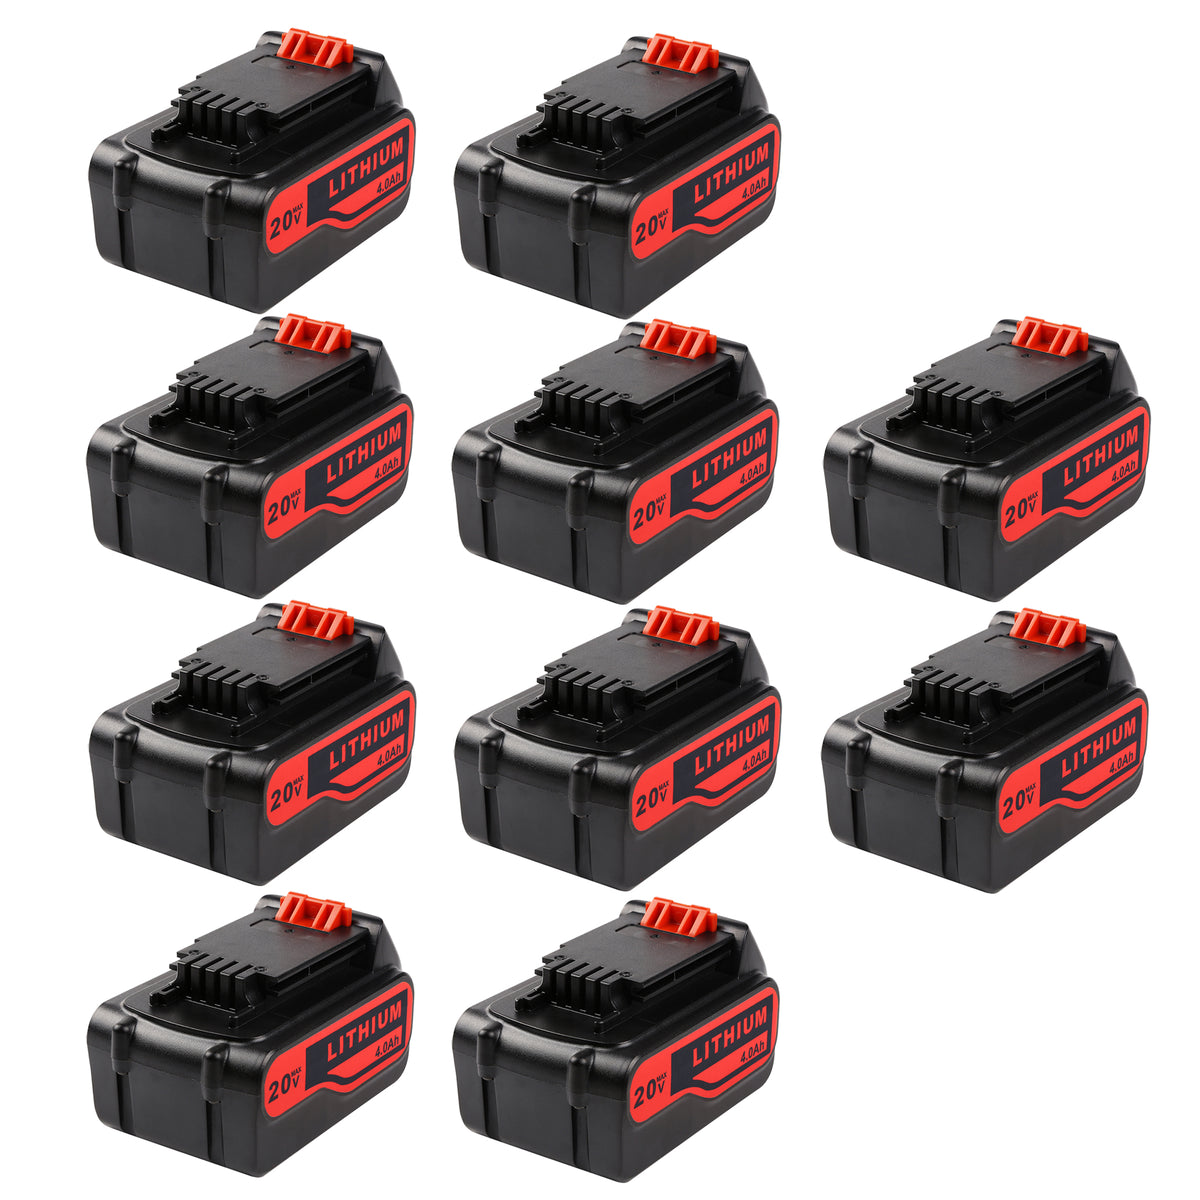 BLACK+DECKER 20V 4.0AH Lithium Ion Battery Pack (LB2X4020)